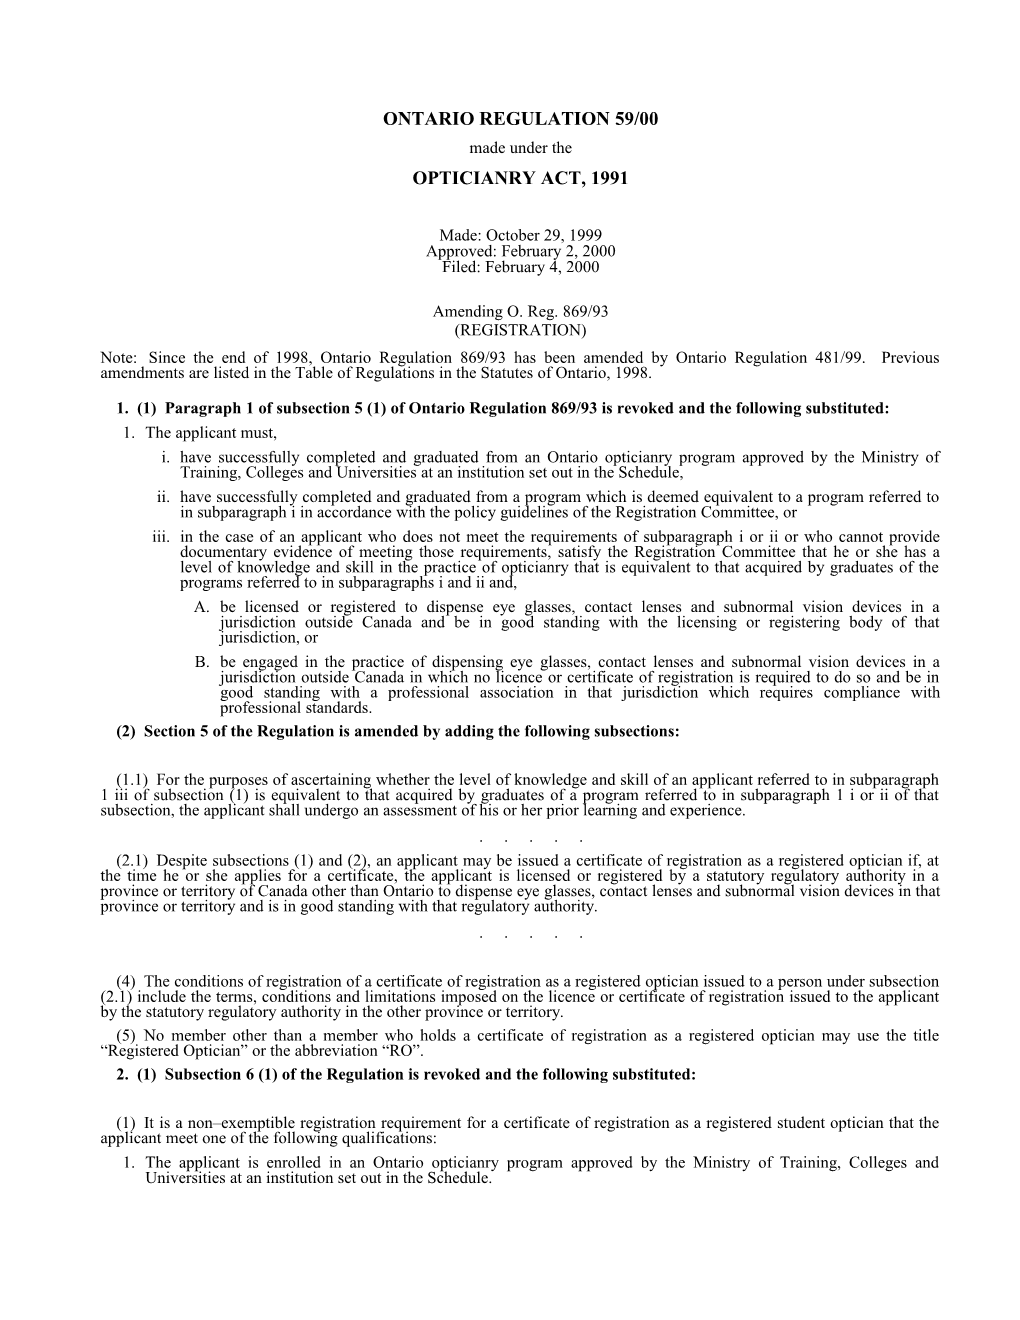 OPTICIANRY ACT, 1991 - O. Reg. 59/00